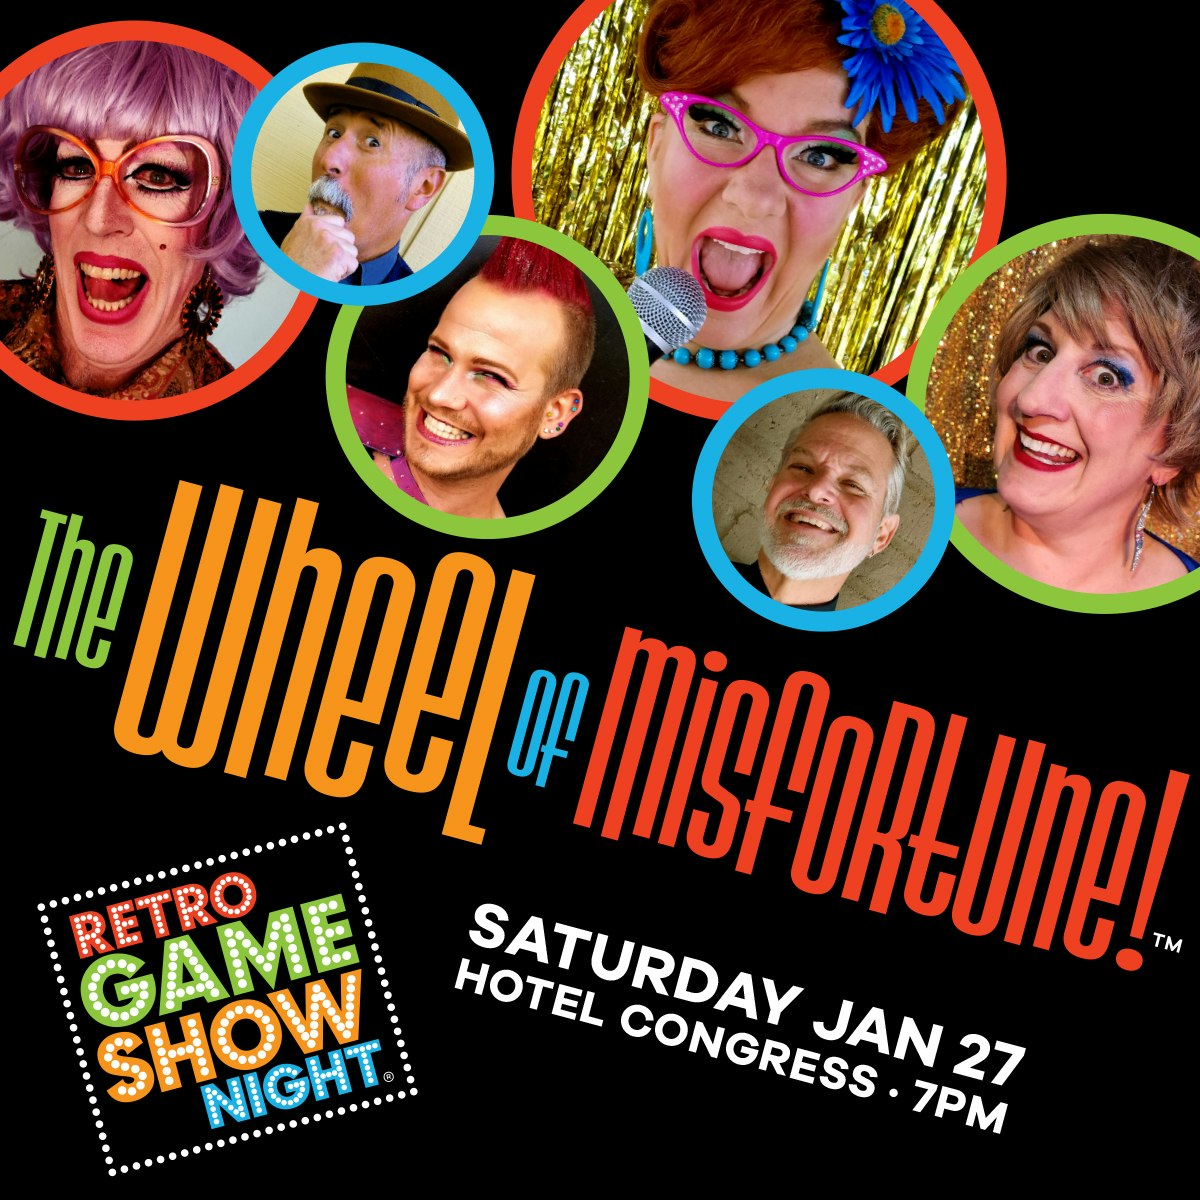 Retro Game Show Night Presents: The Wheel of Misfortune!